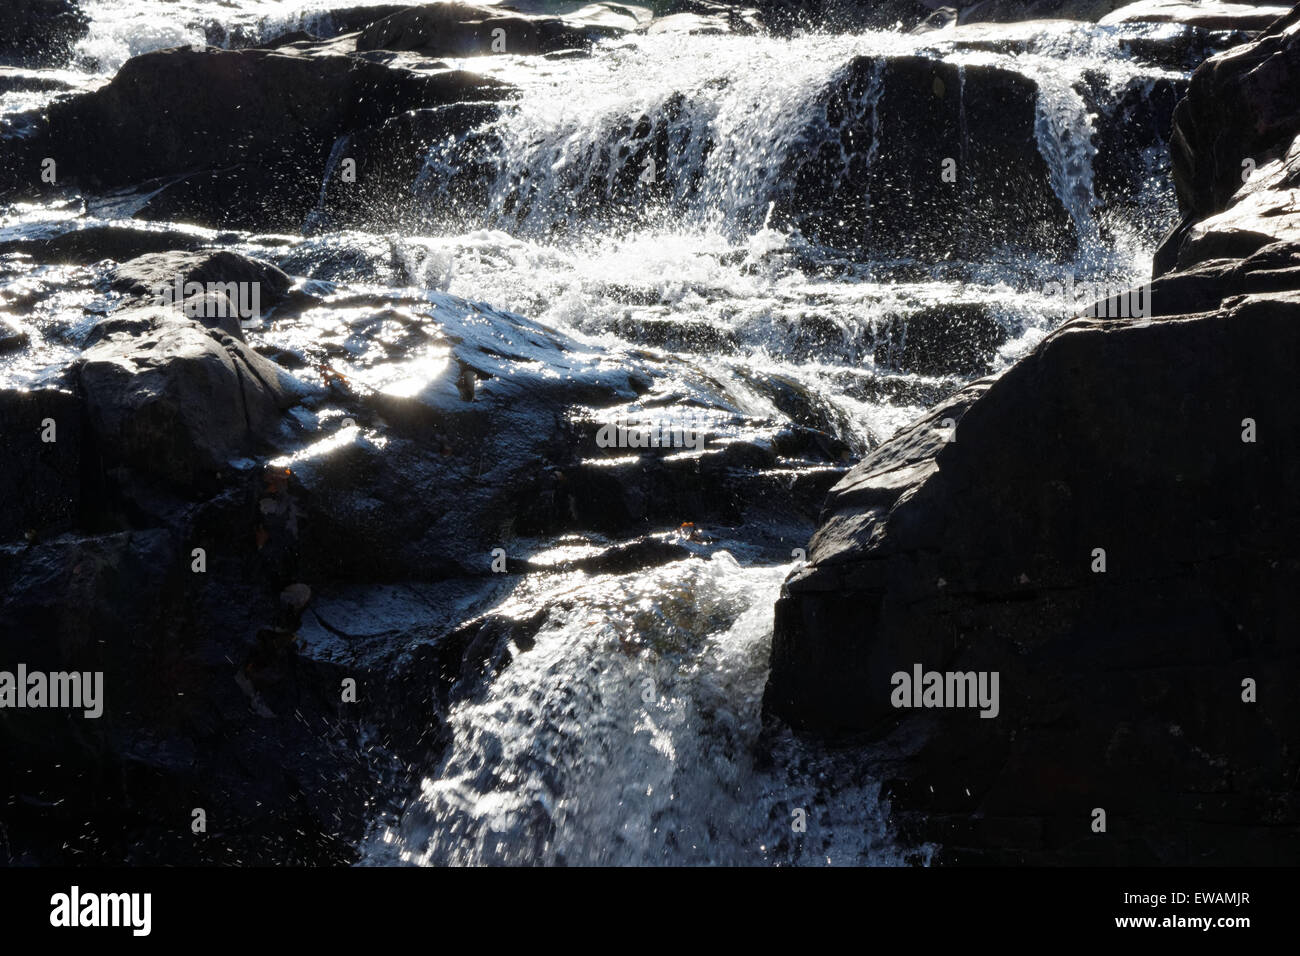 Running White Water over the Rocks Stock Photo